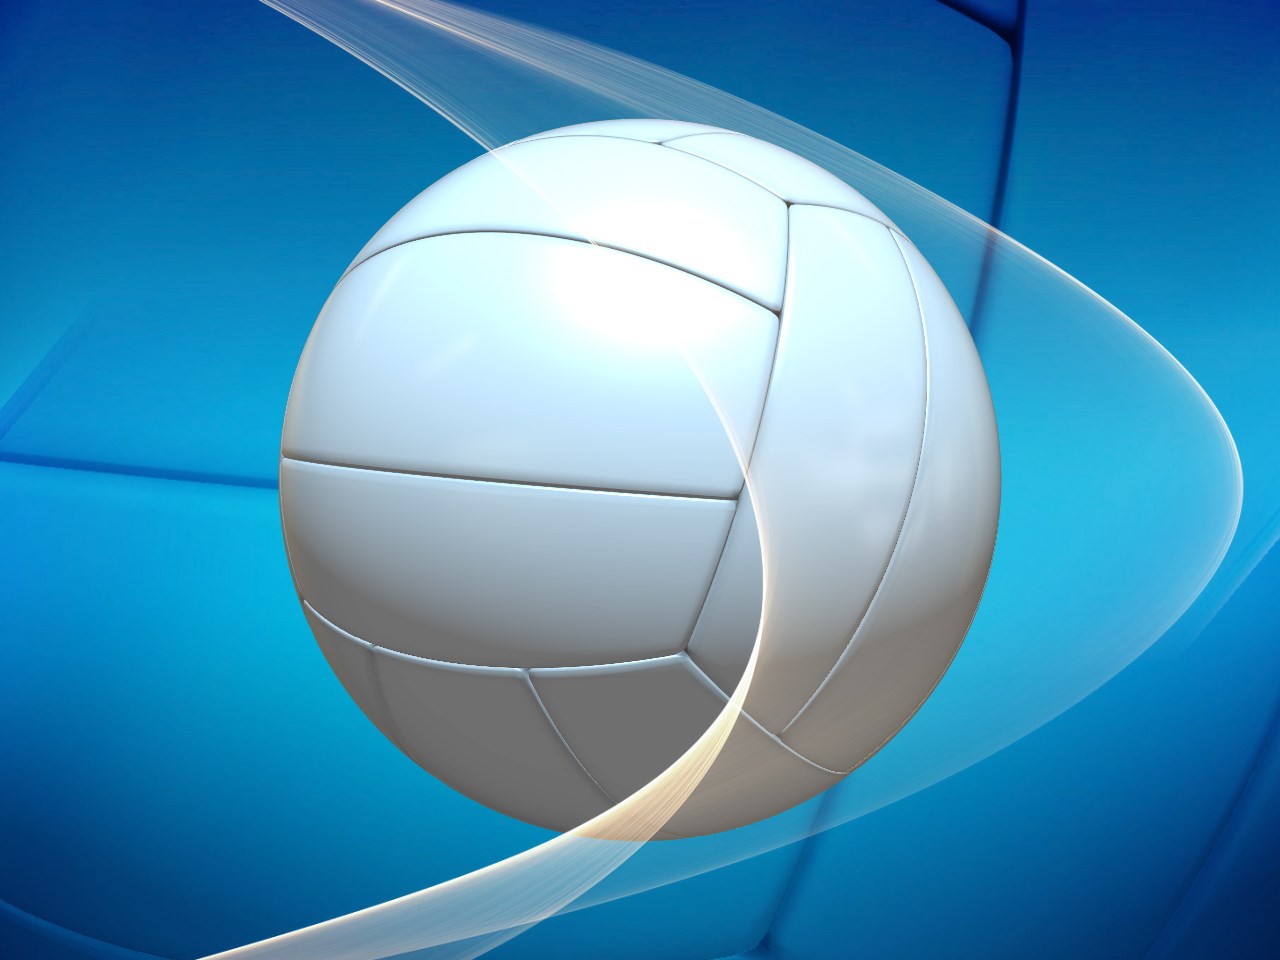 USA womens volleyball team to host tournament in Wichita -